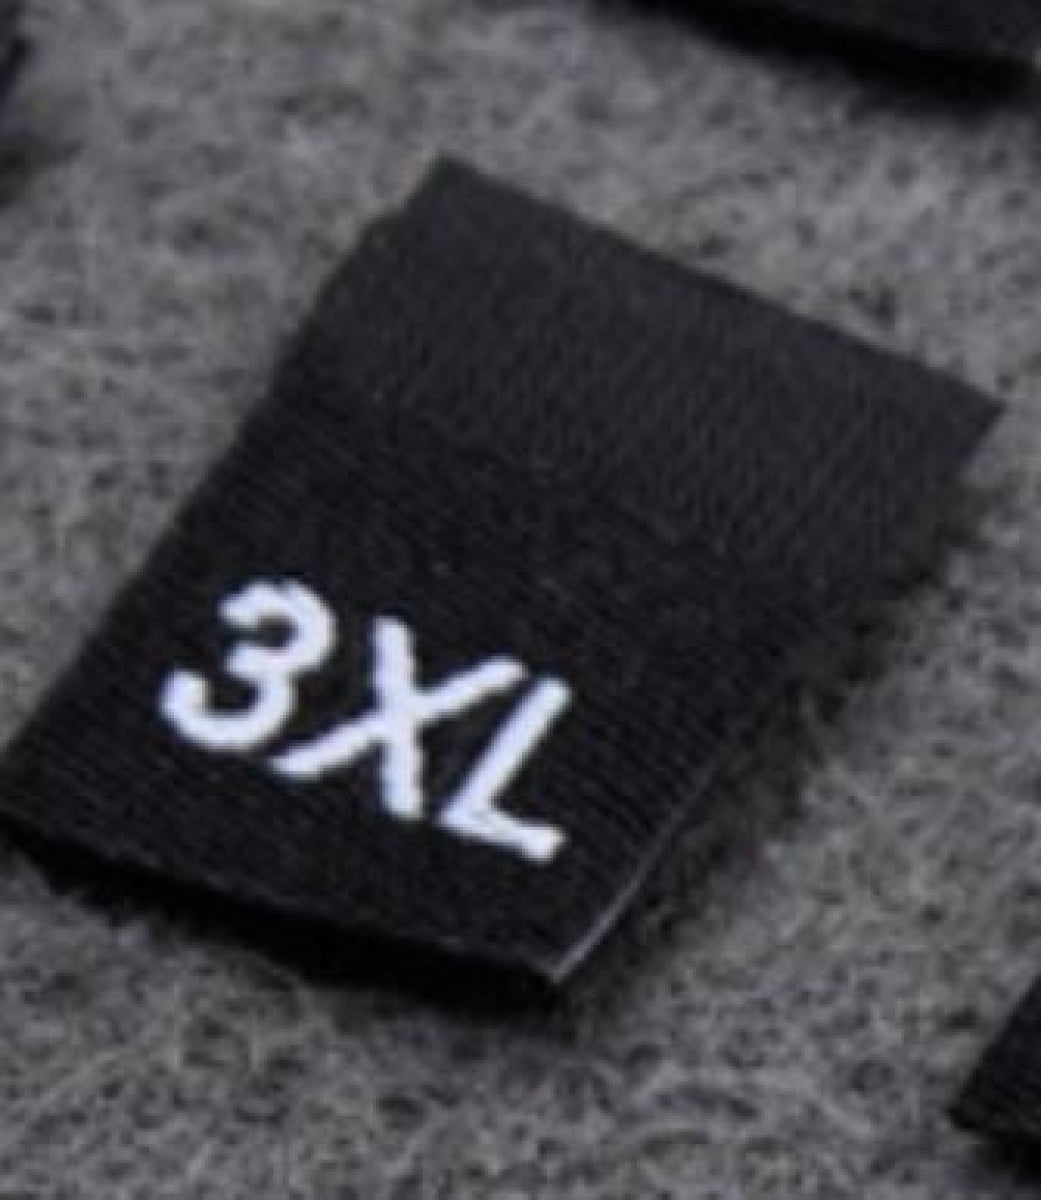 100pcs Clothing Size Label Tags XS S M L XL 2XL 3XL 4XL Black Text White Garment Clothes T Shirt Dress Fabric - 3XL Black - Asia Sell